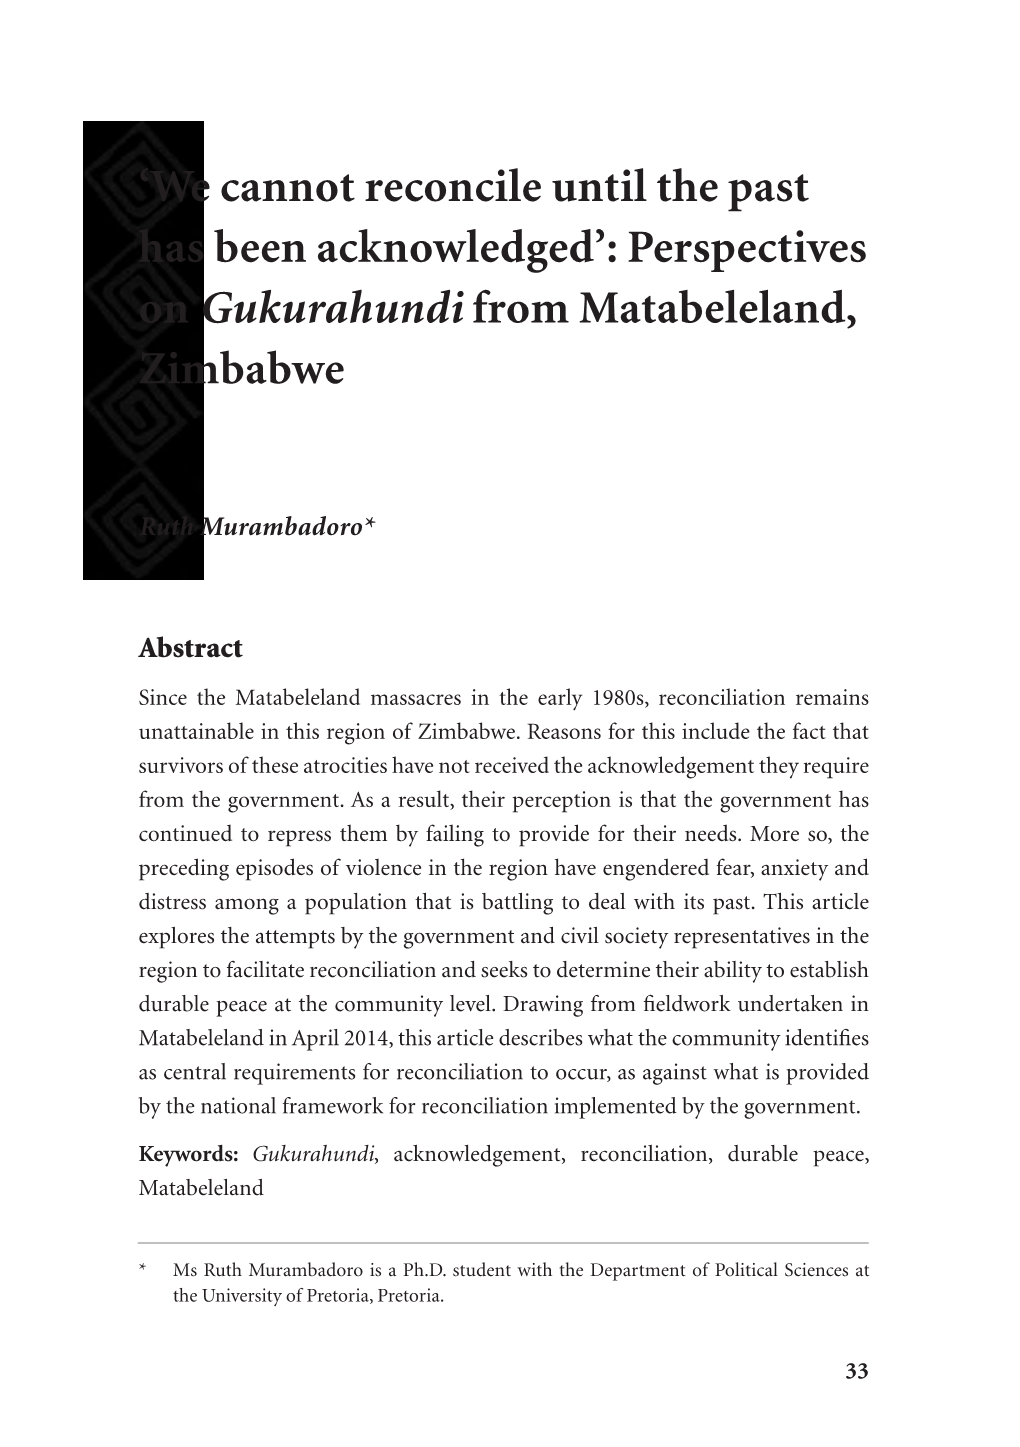 Perspectives on Gukurahundi from Matabeleland, Zimbabwe